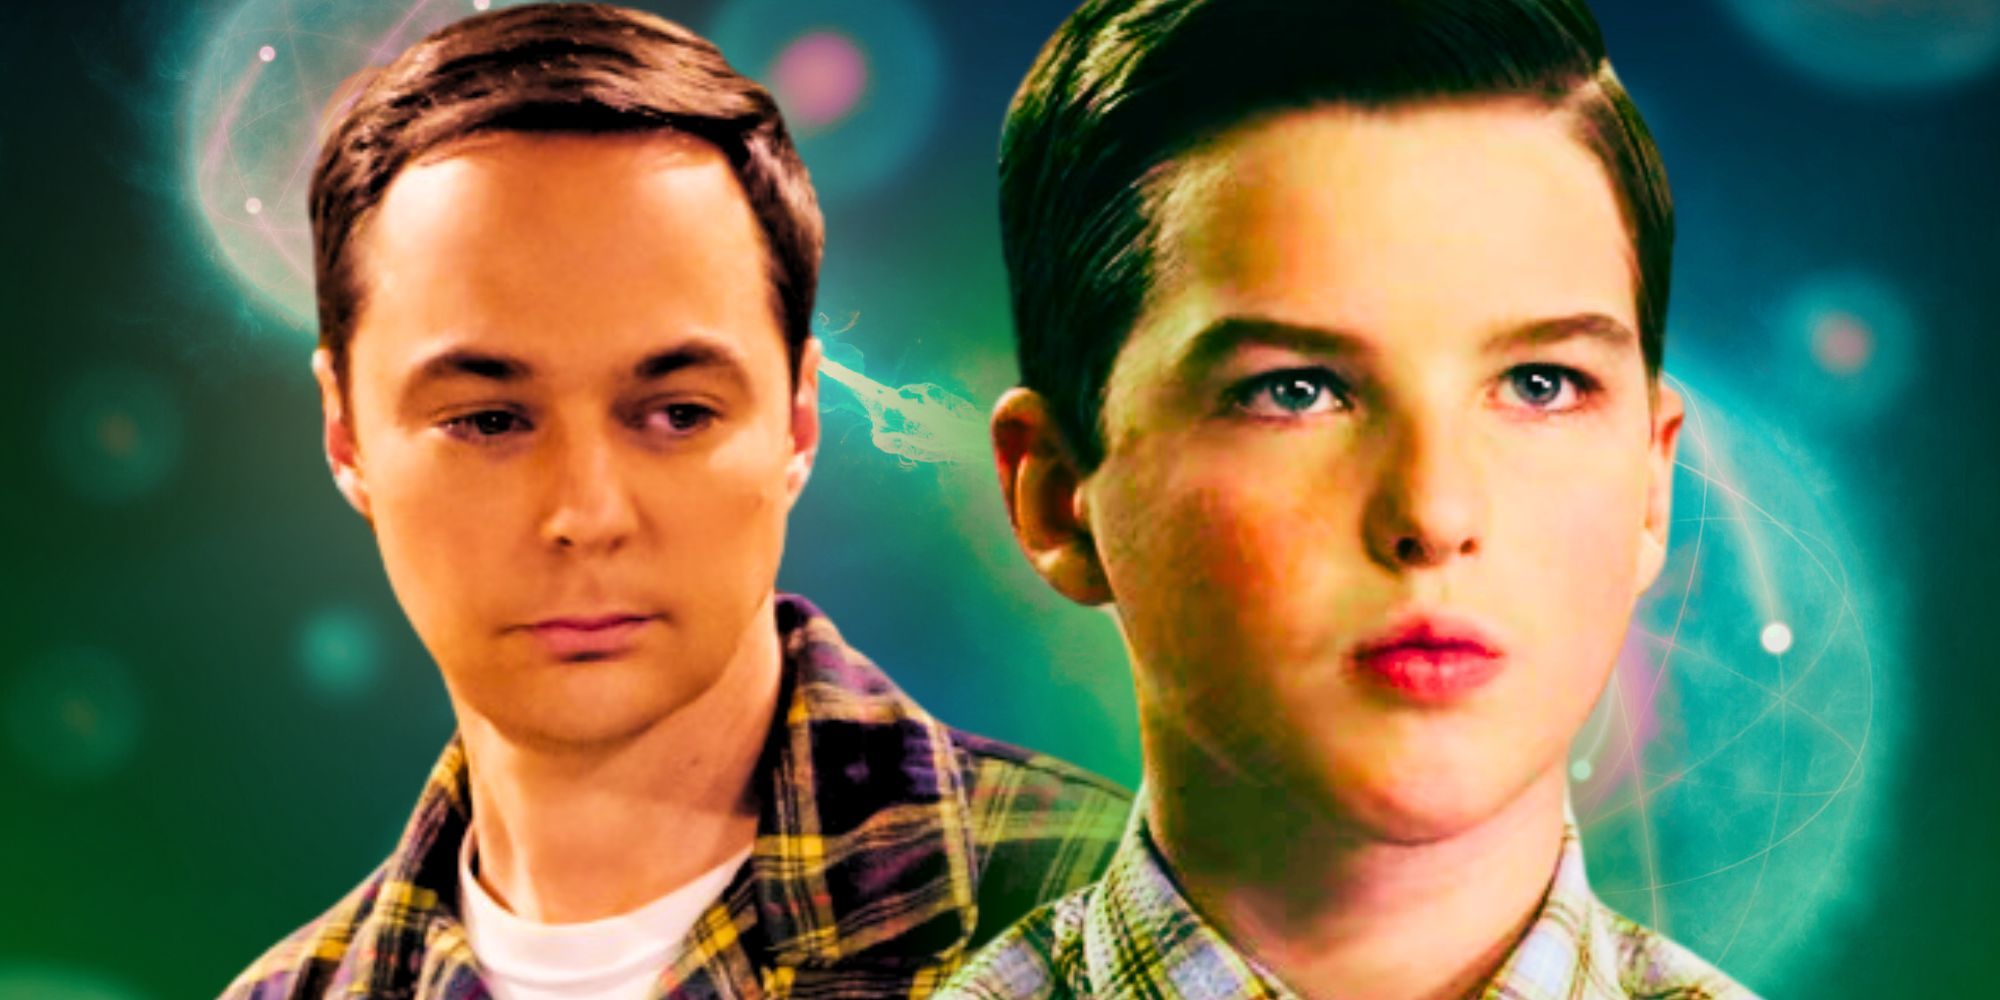 Jim Parsons as Sheldon Cooper in The Big Bang Theory and Iain Armitage as Sheldon Cooper in Young Sheldon